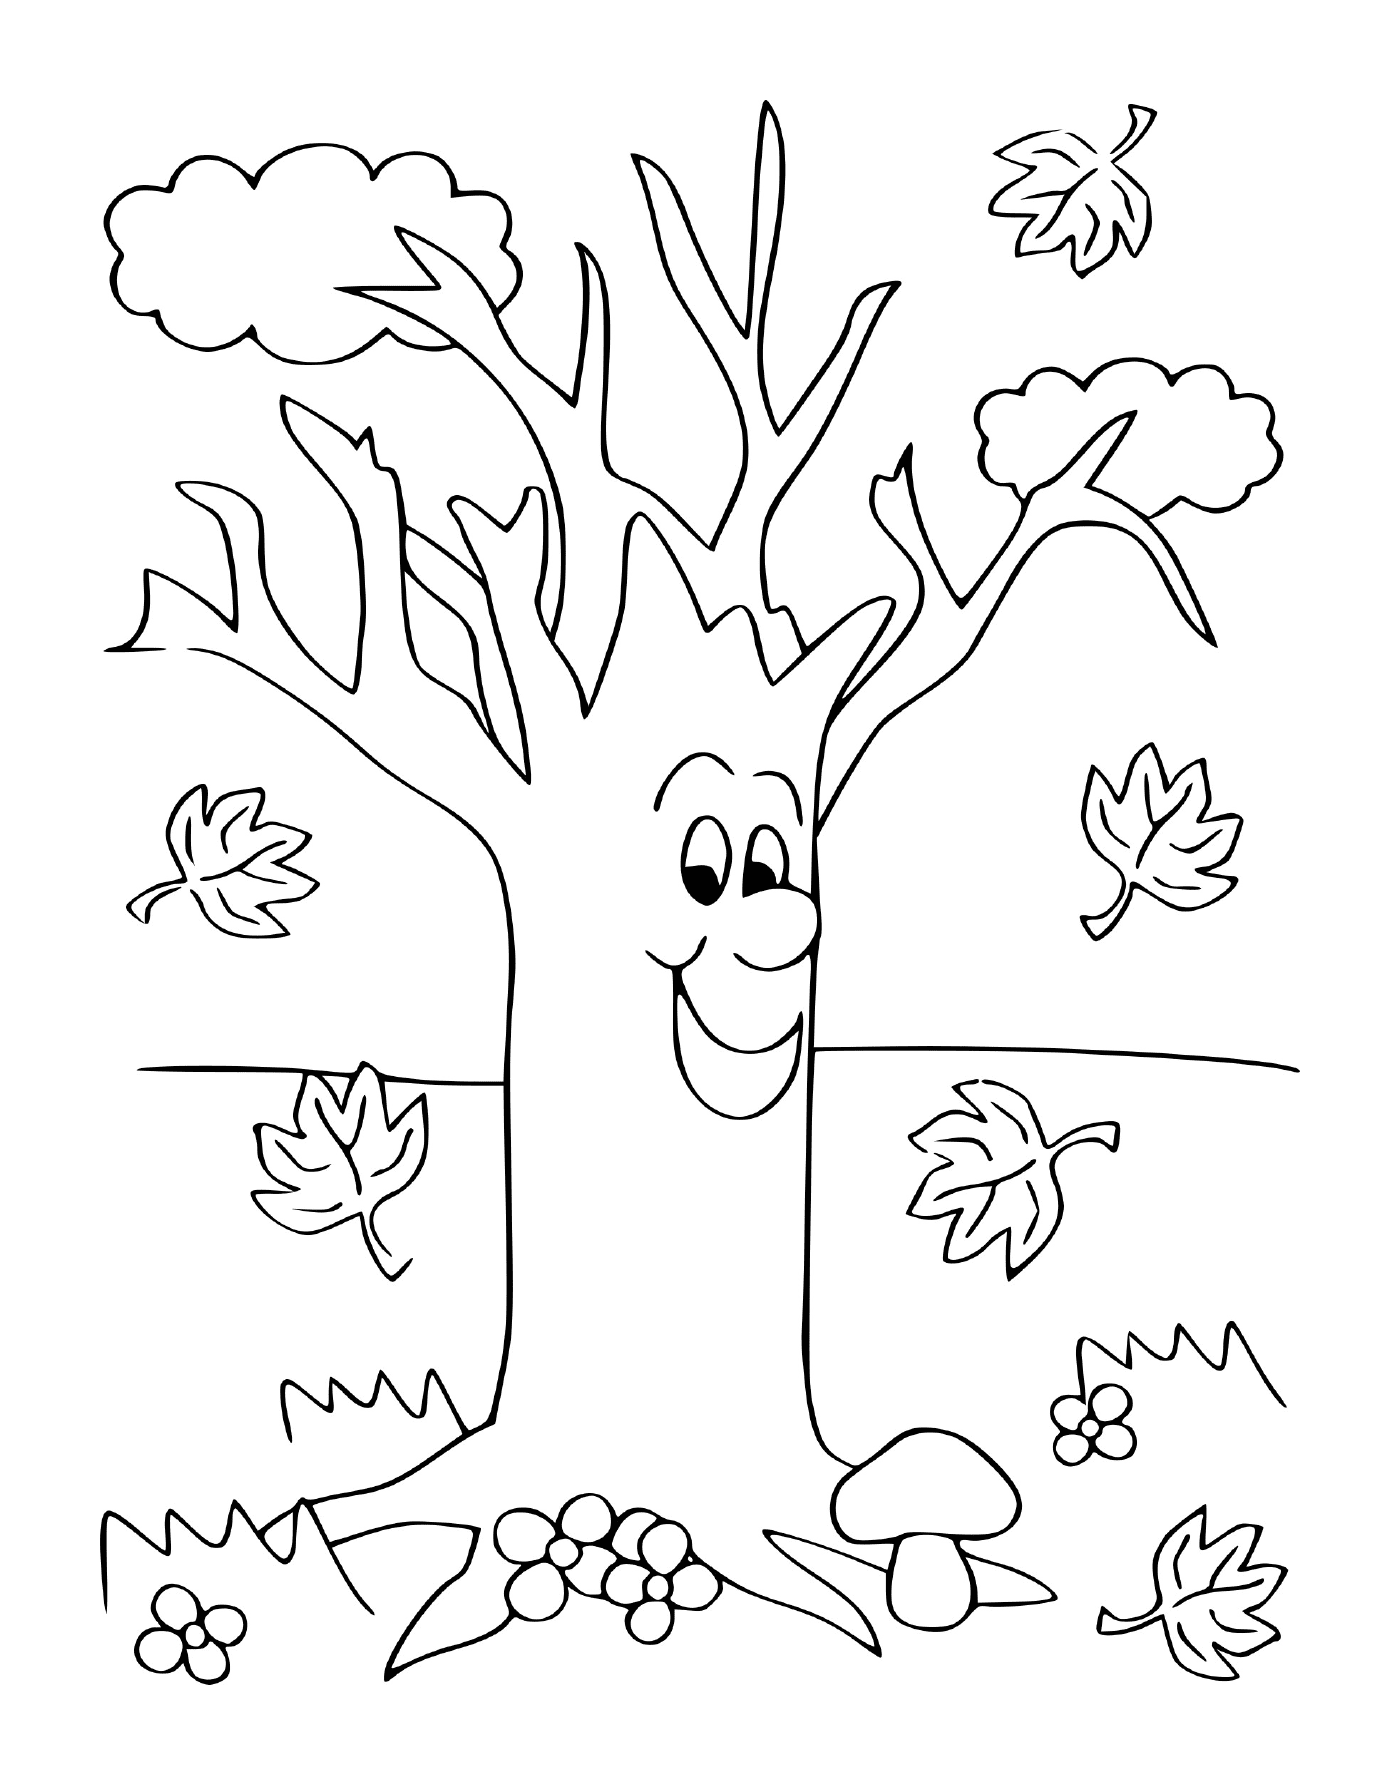  Дерево с листьями 